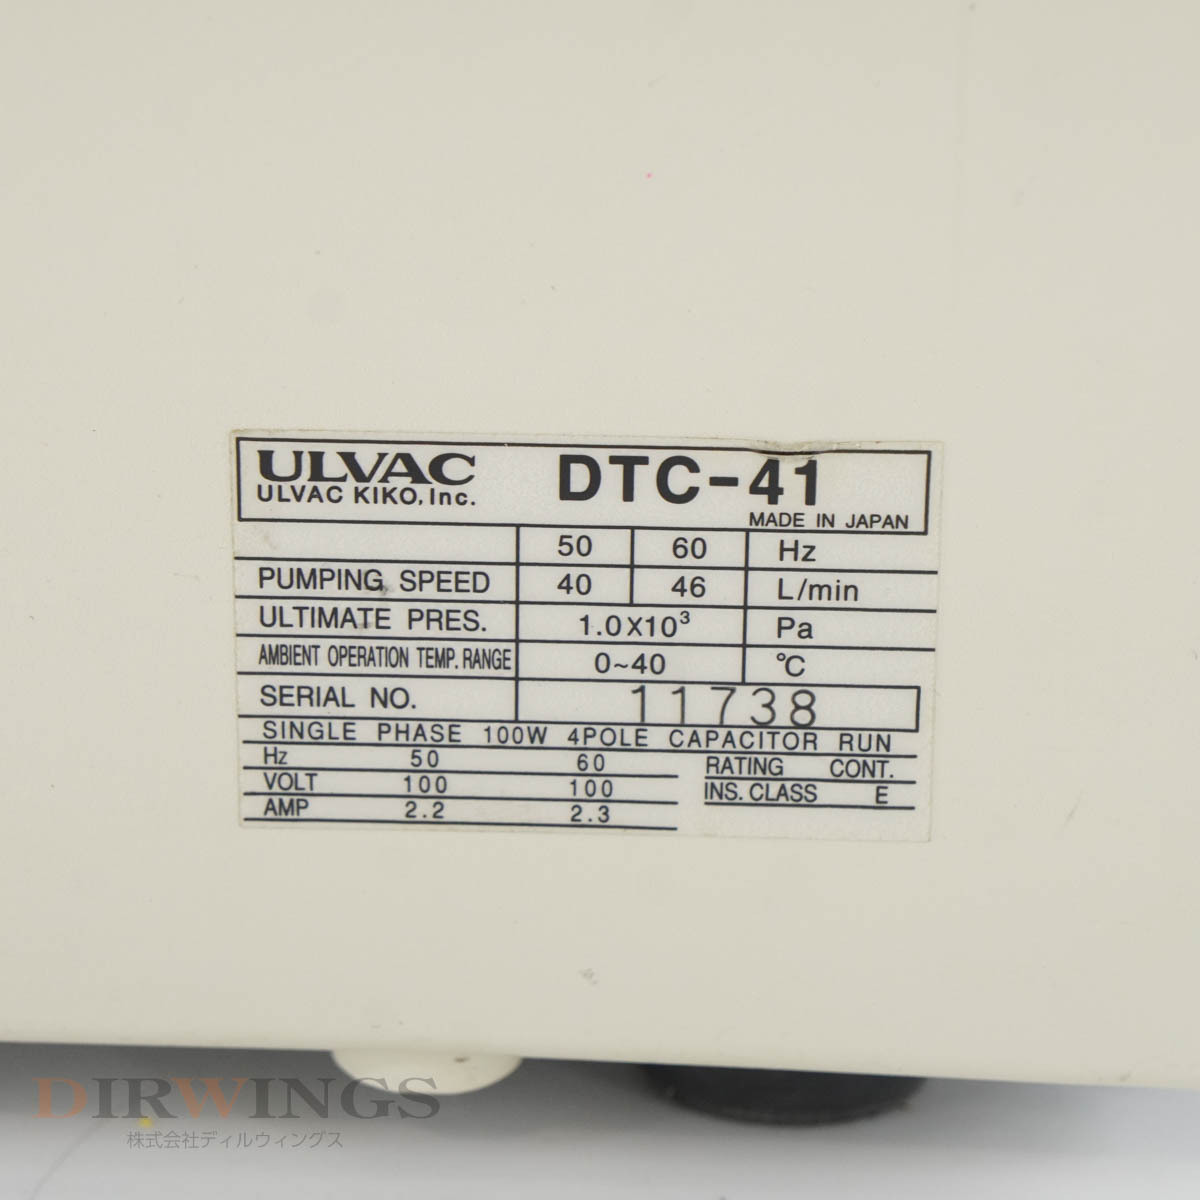 [JB] guarantee none DTC-41 ULVAC 50/60Hz Alba kDIAPHRAGM TYPE DRY VACUUM PUMP diaphragm type dry vacuum pump 100V[05926-0011]